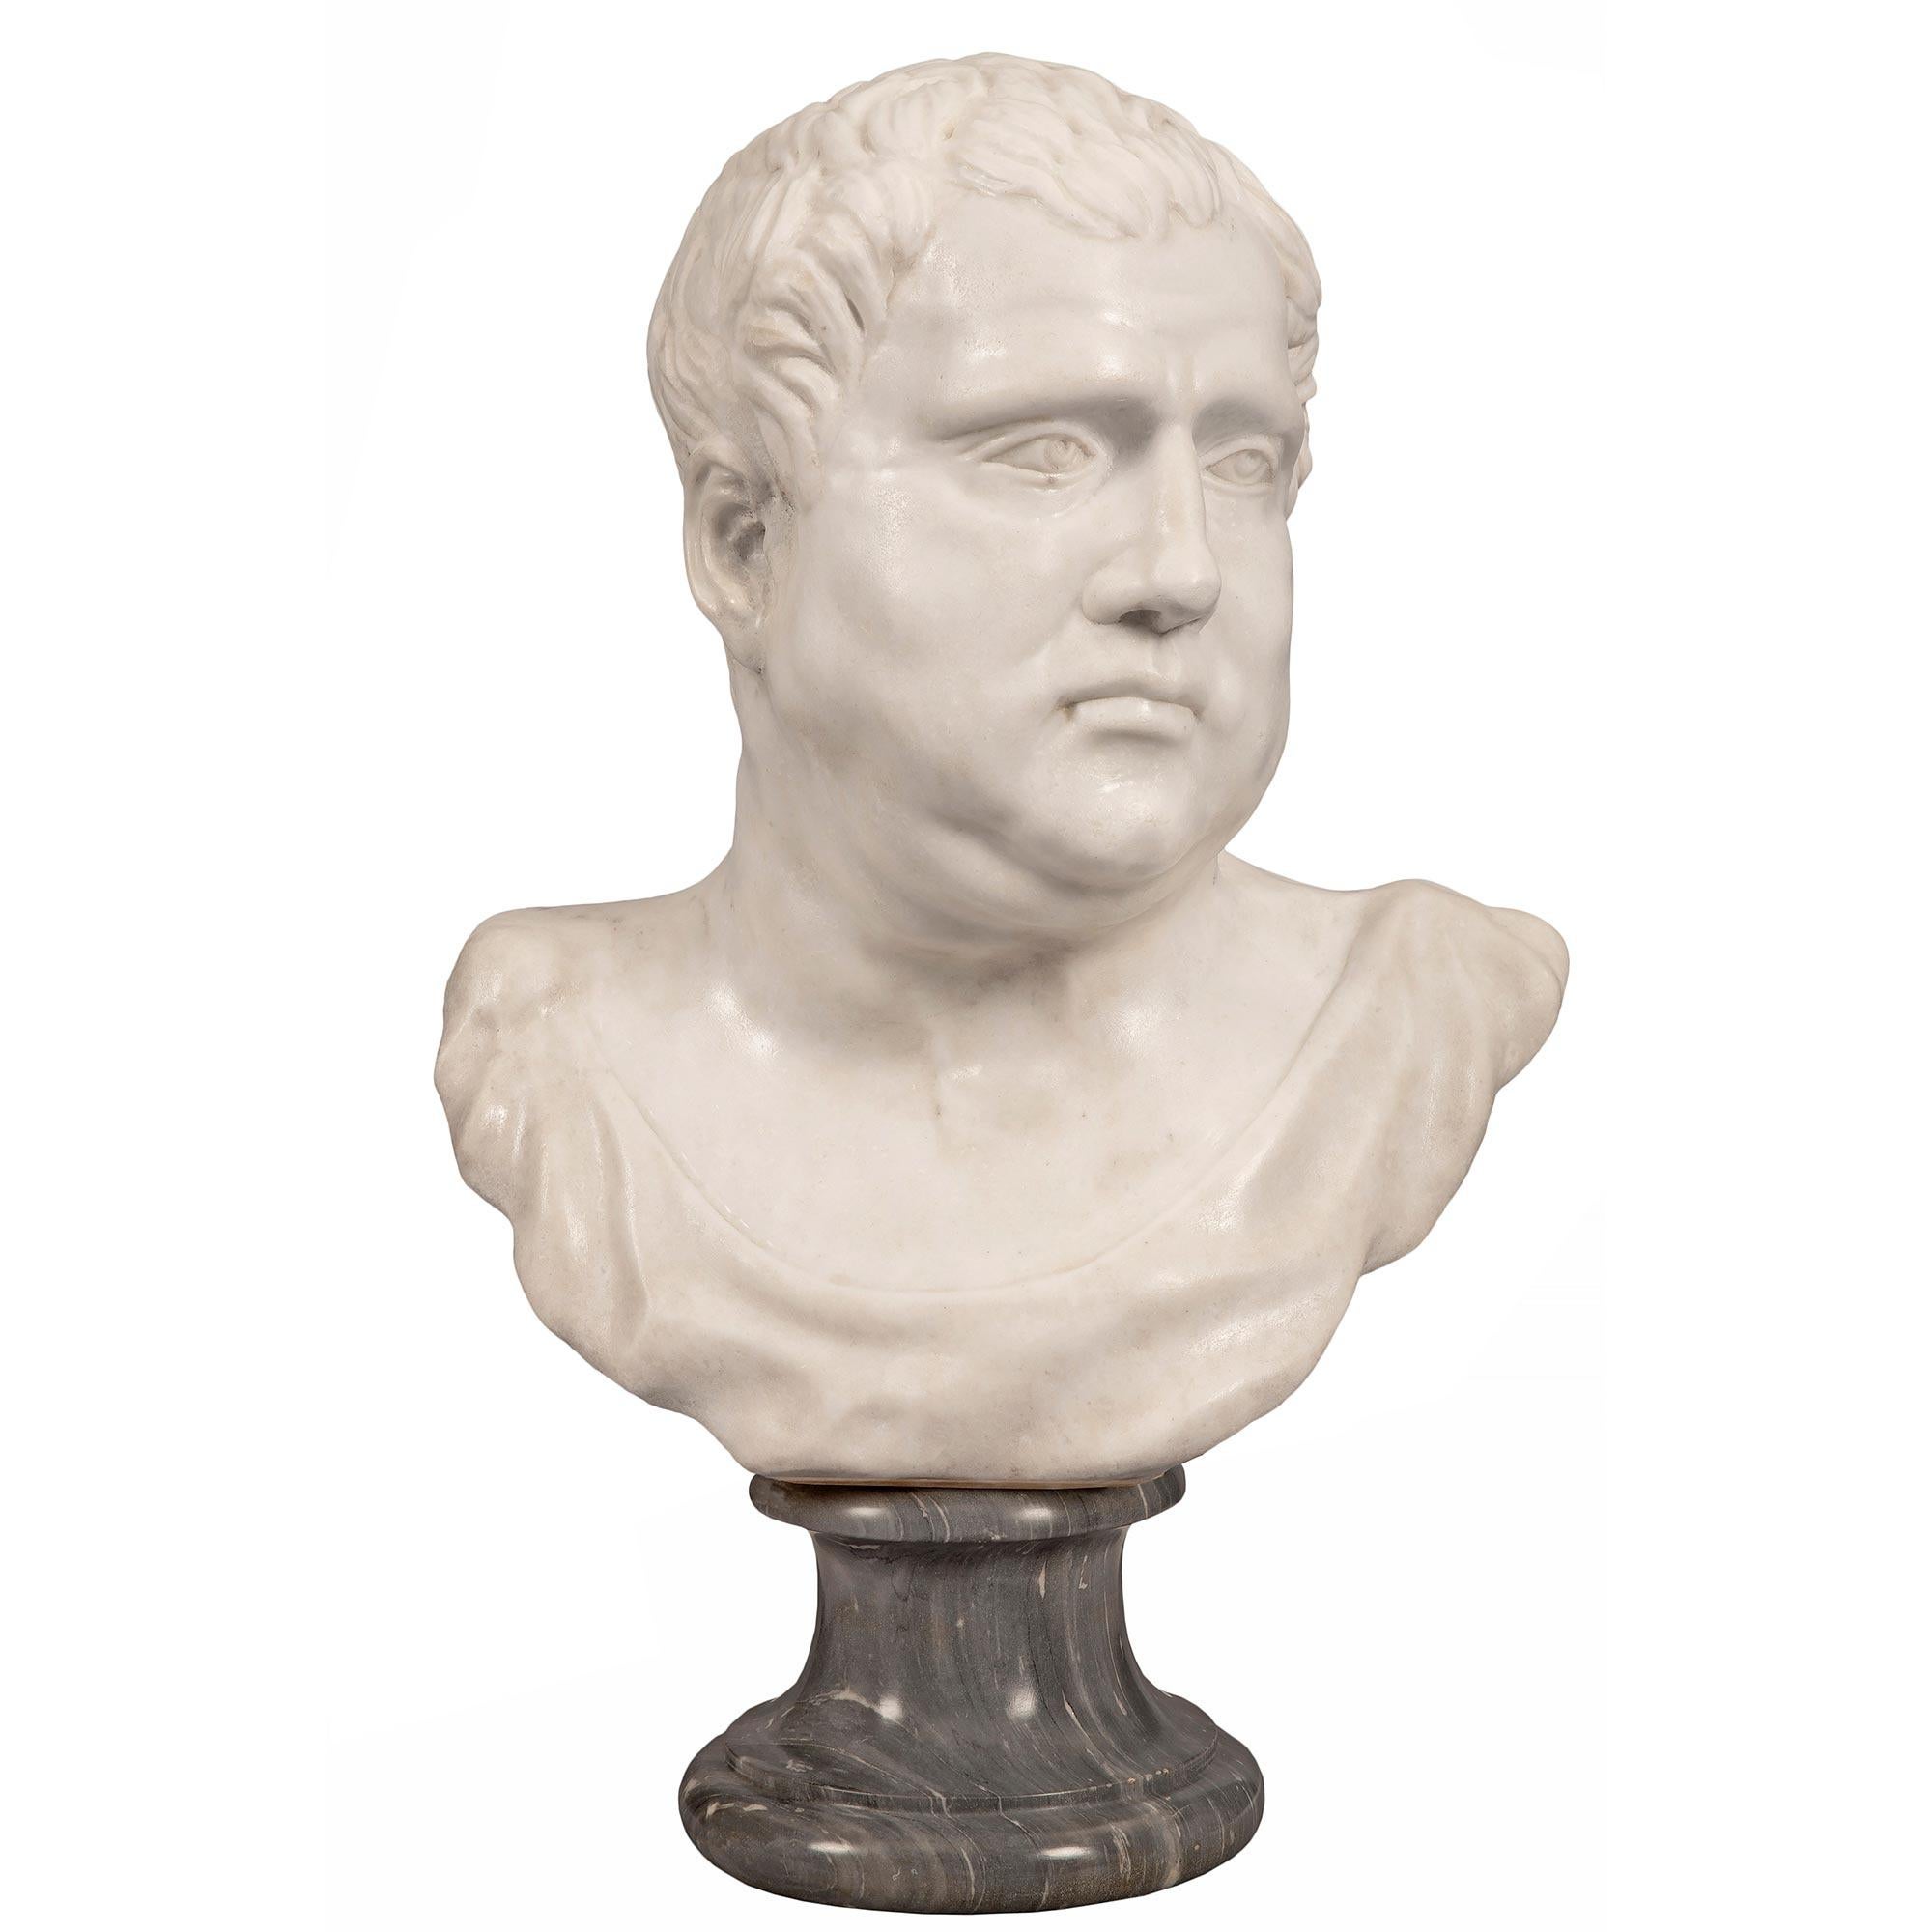 Italian Early 19th Century White Carrara Marble Bust of a Roman Emperor